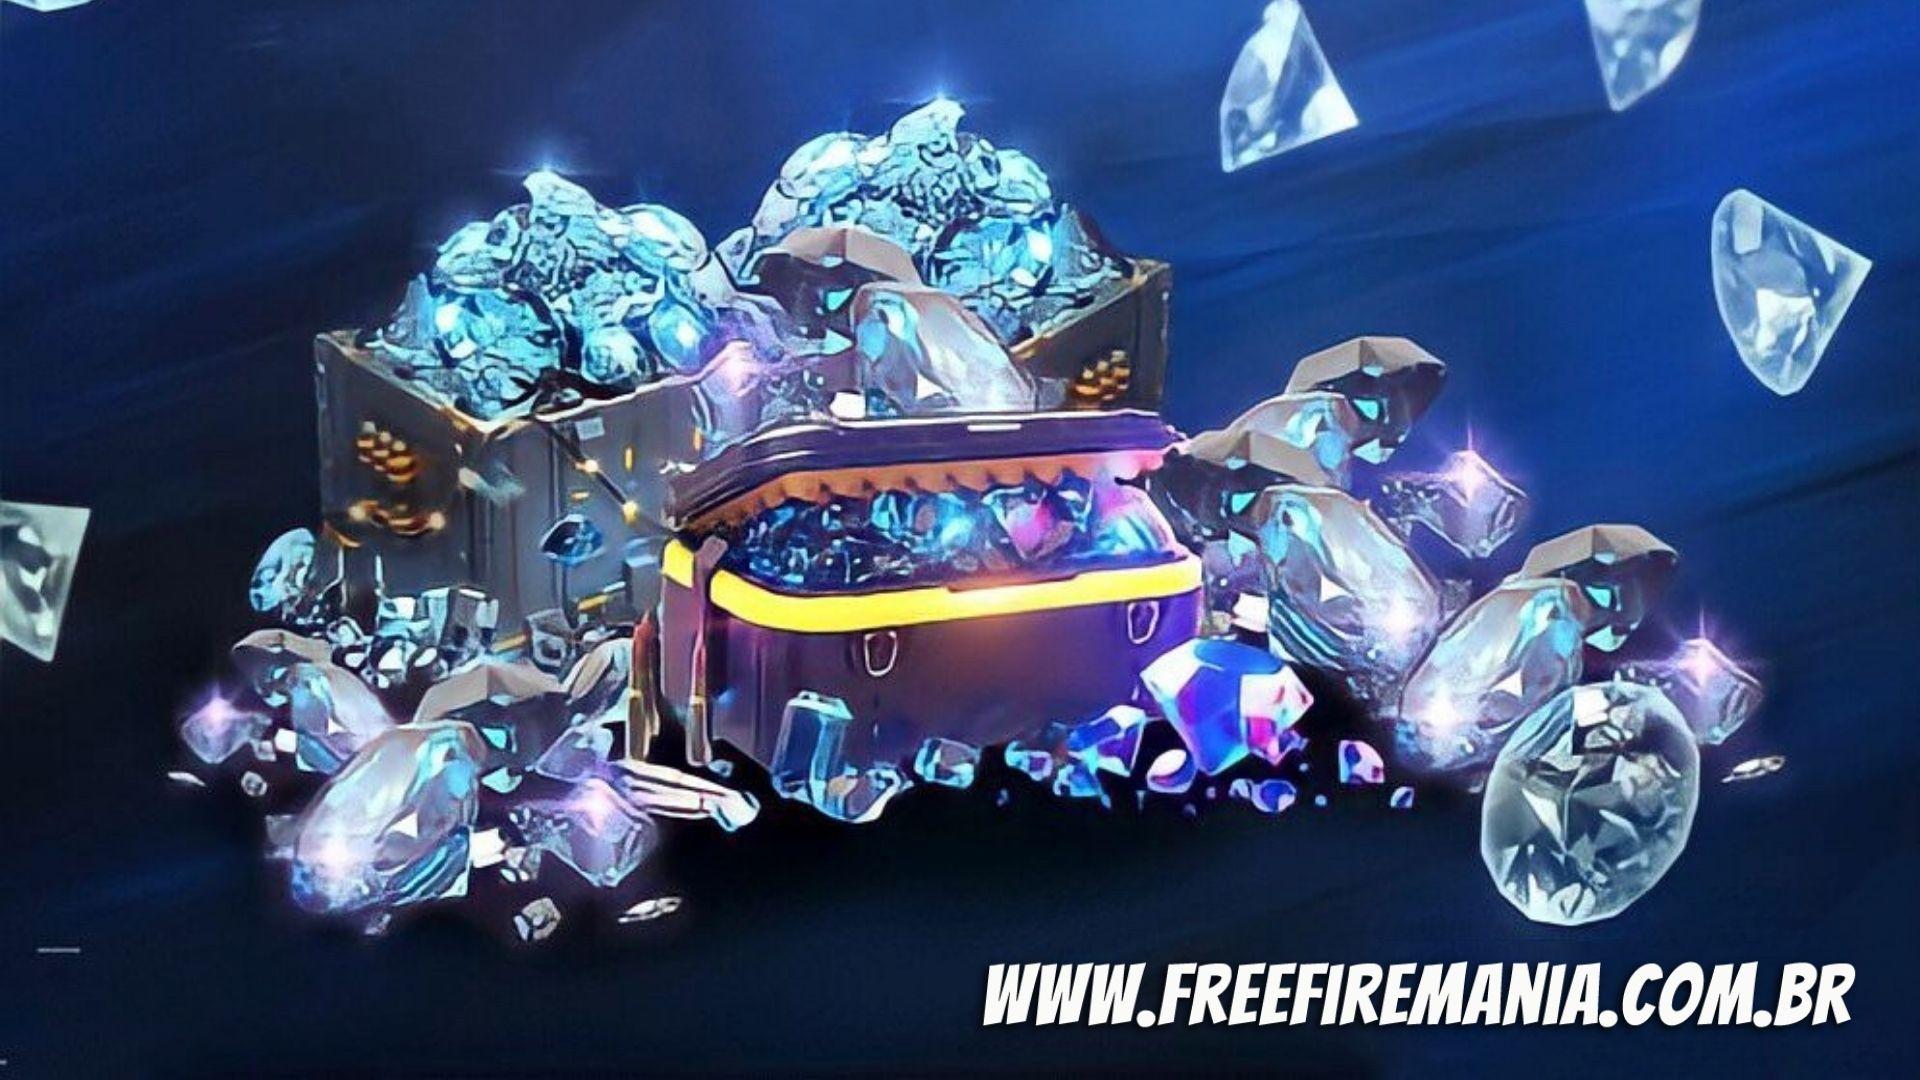 Free Fire - 520 Diamantes + 20% de Bônus - LacerdaGames